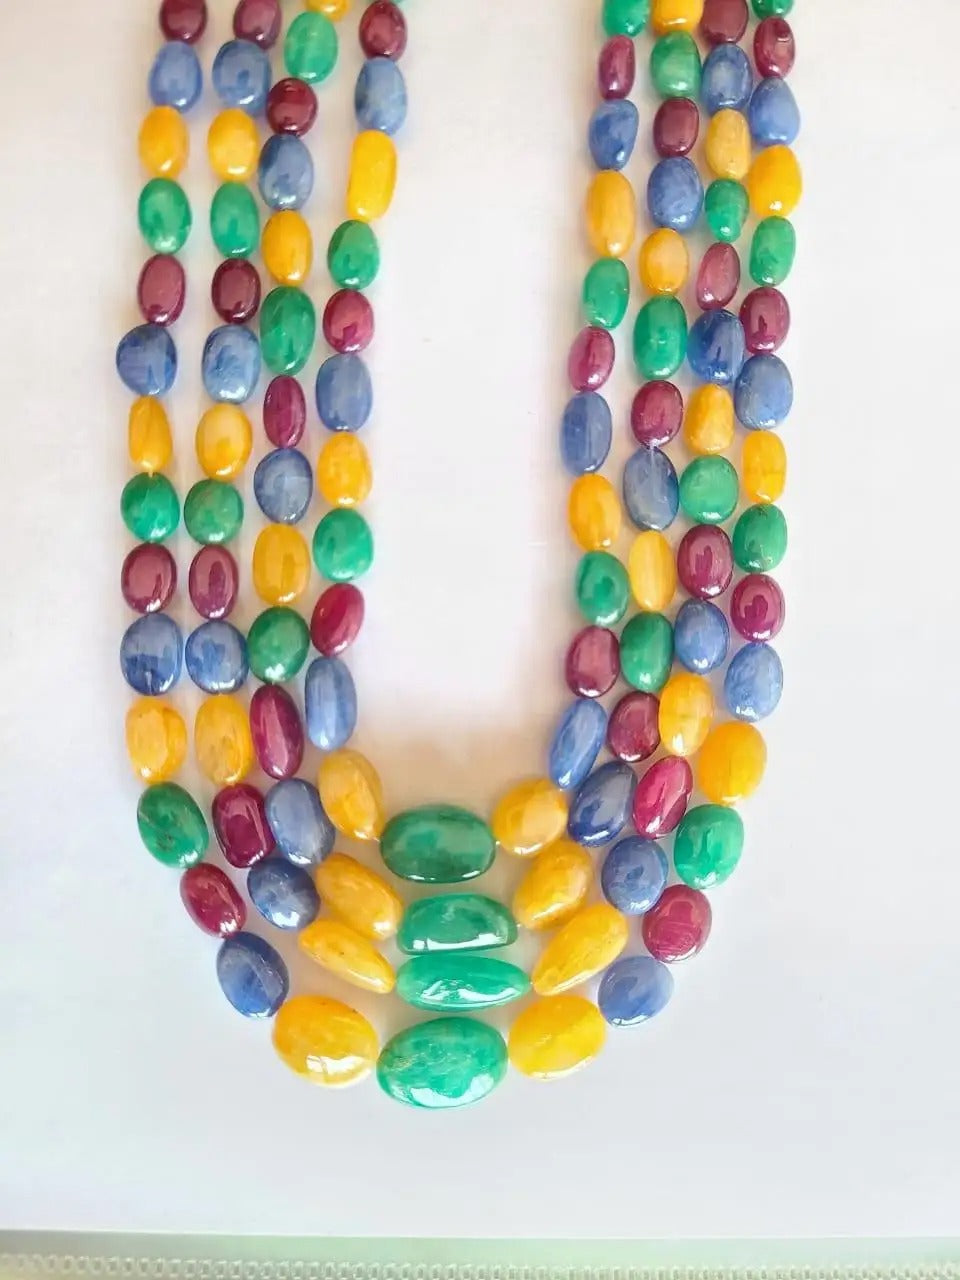 emerald stone necklace